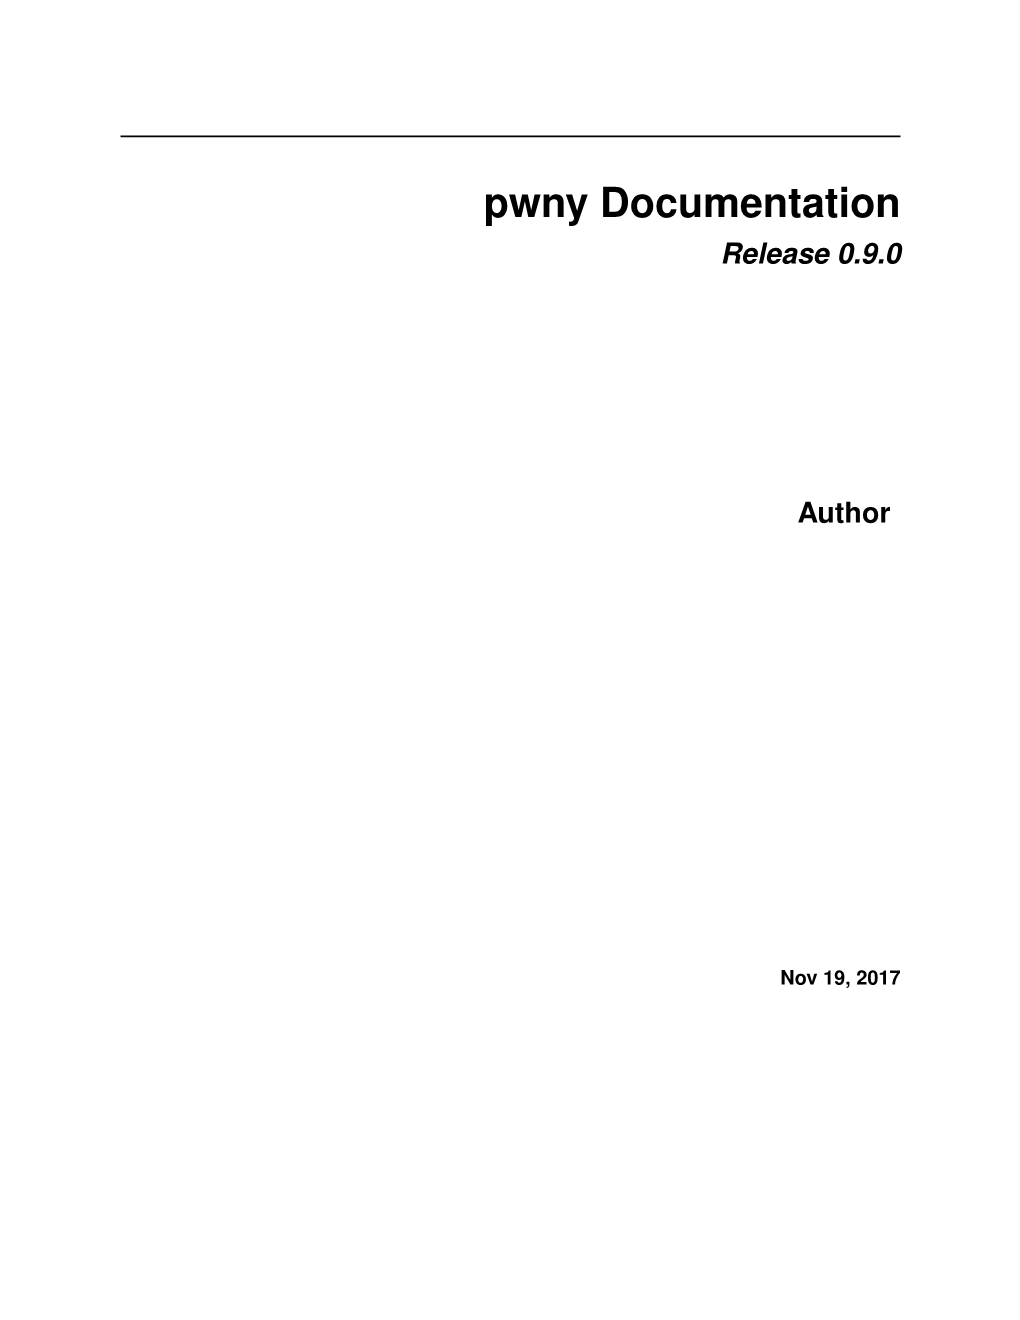 Pwny Documentation Release 0.9.0